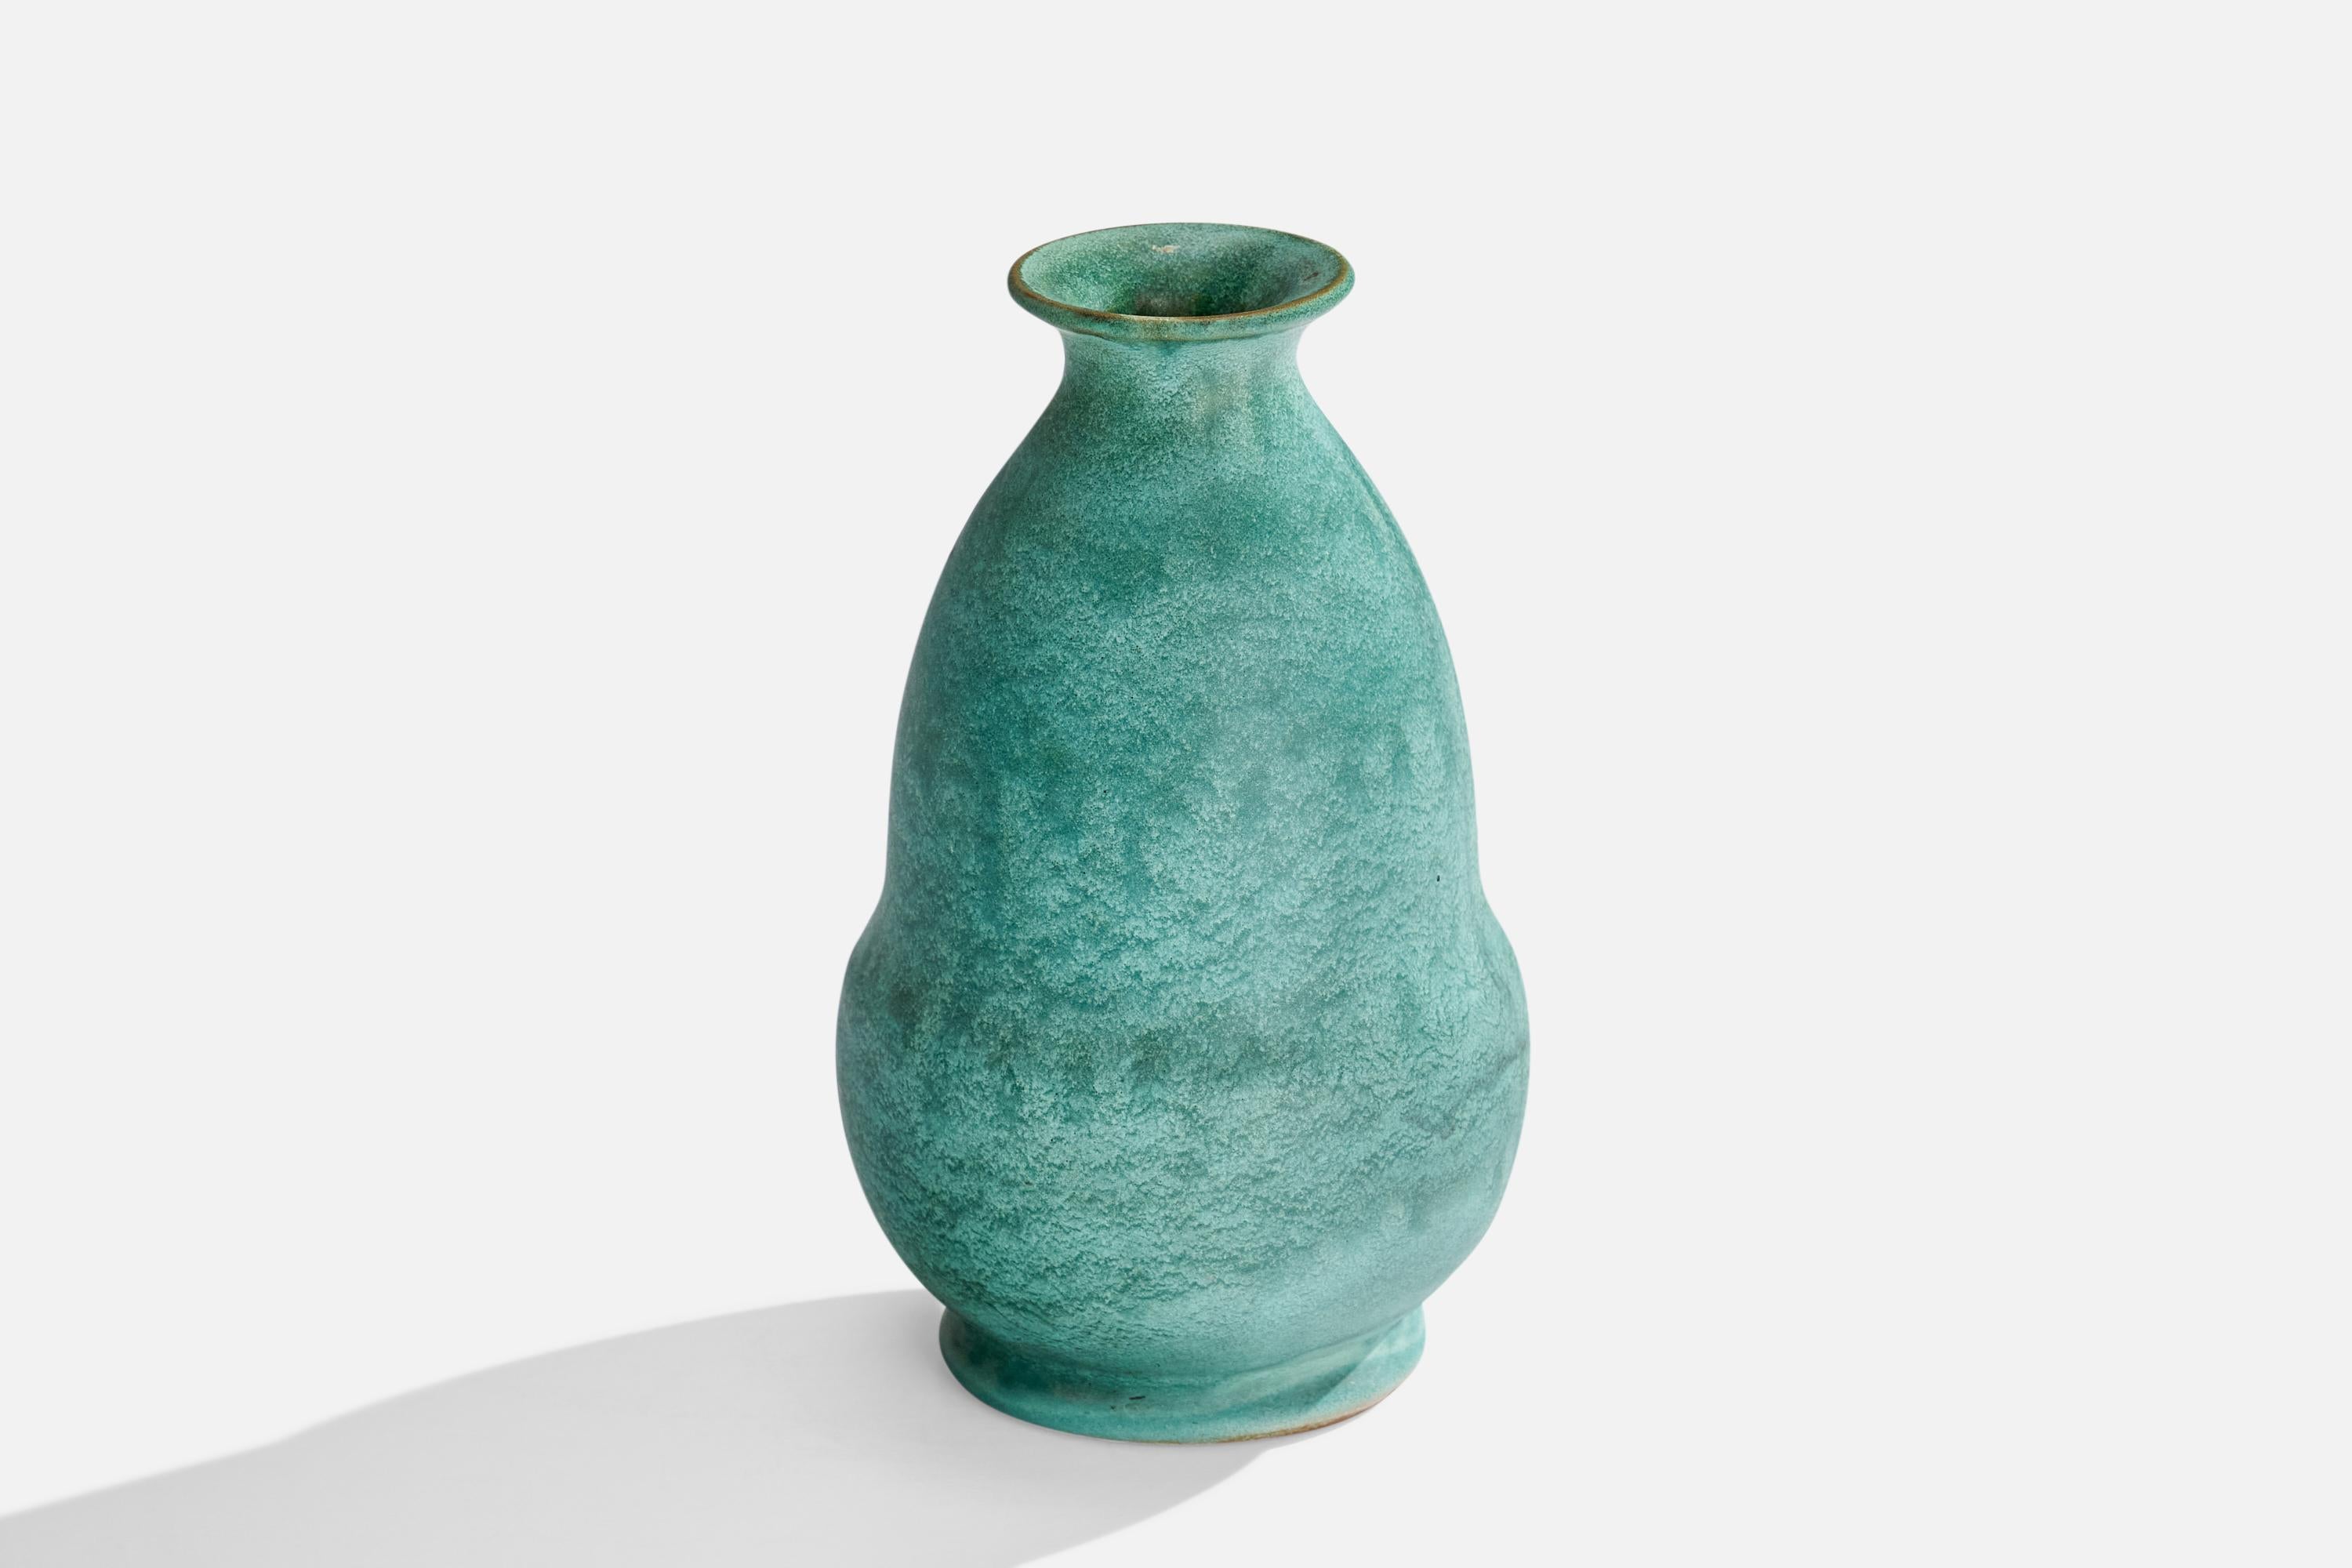 A blue green-glazed earthenware vase designed and produced by Upsala Ekeby, Sweden, c. 1930s.